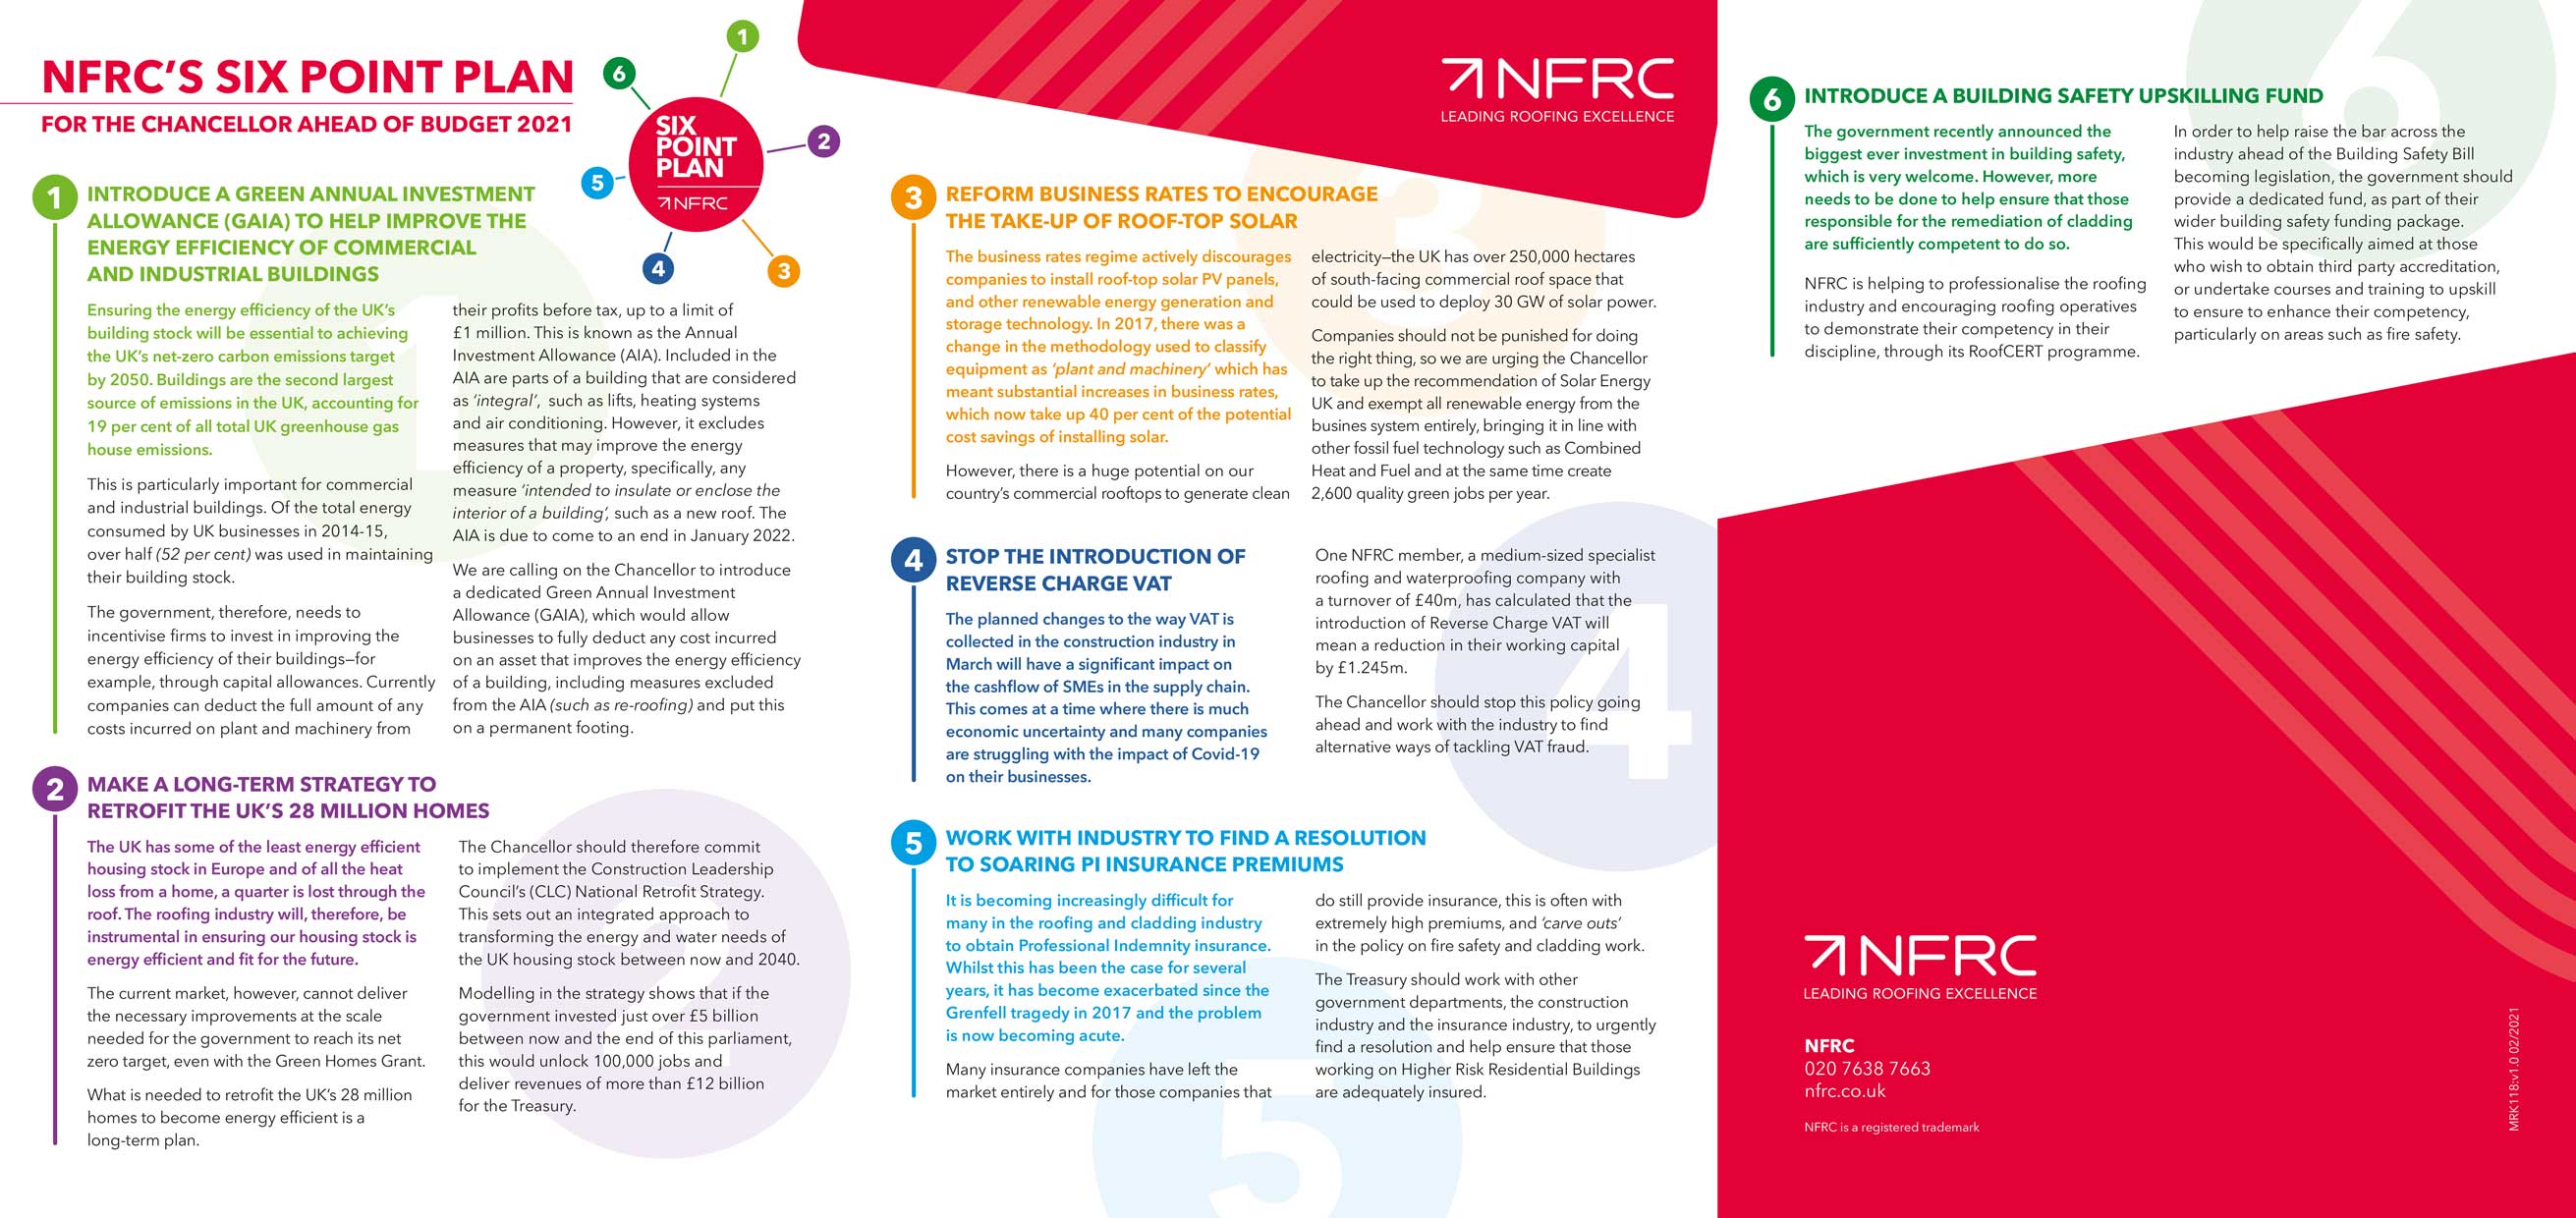 NFRC 2021 Budget six point plan